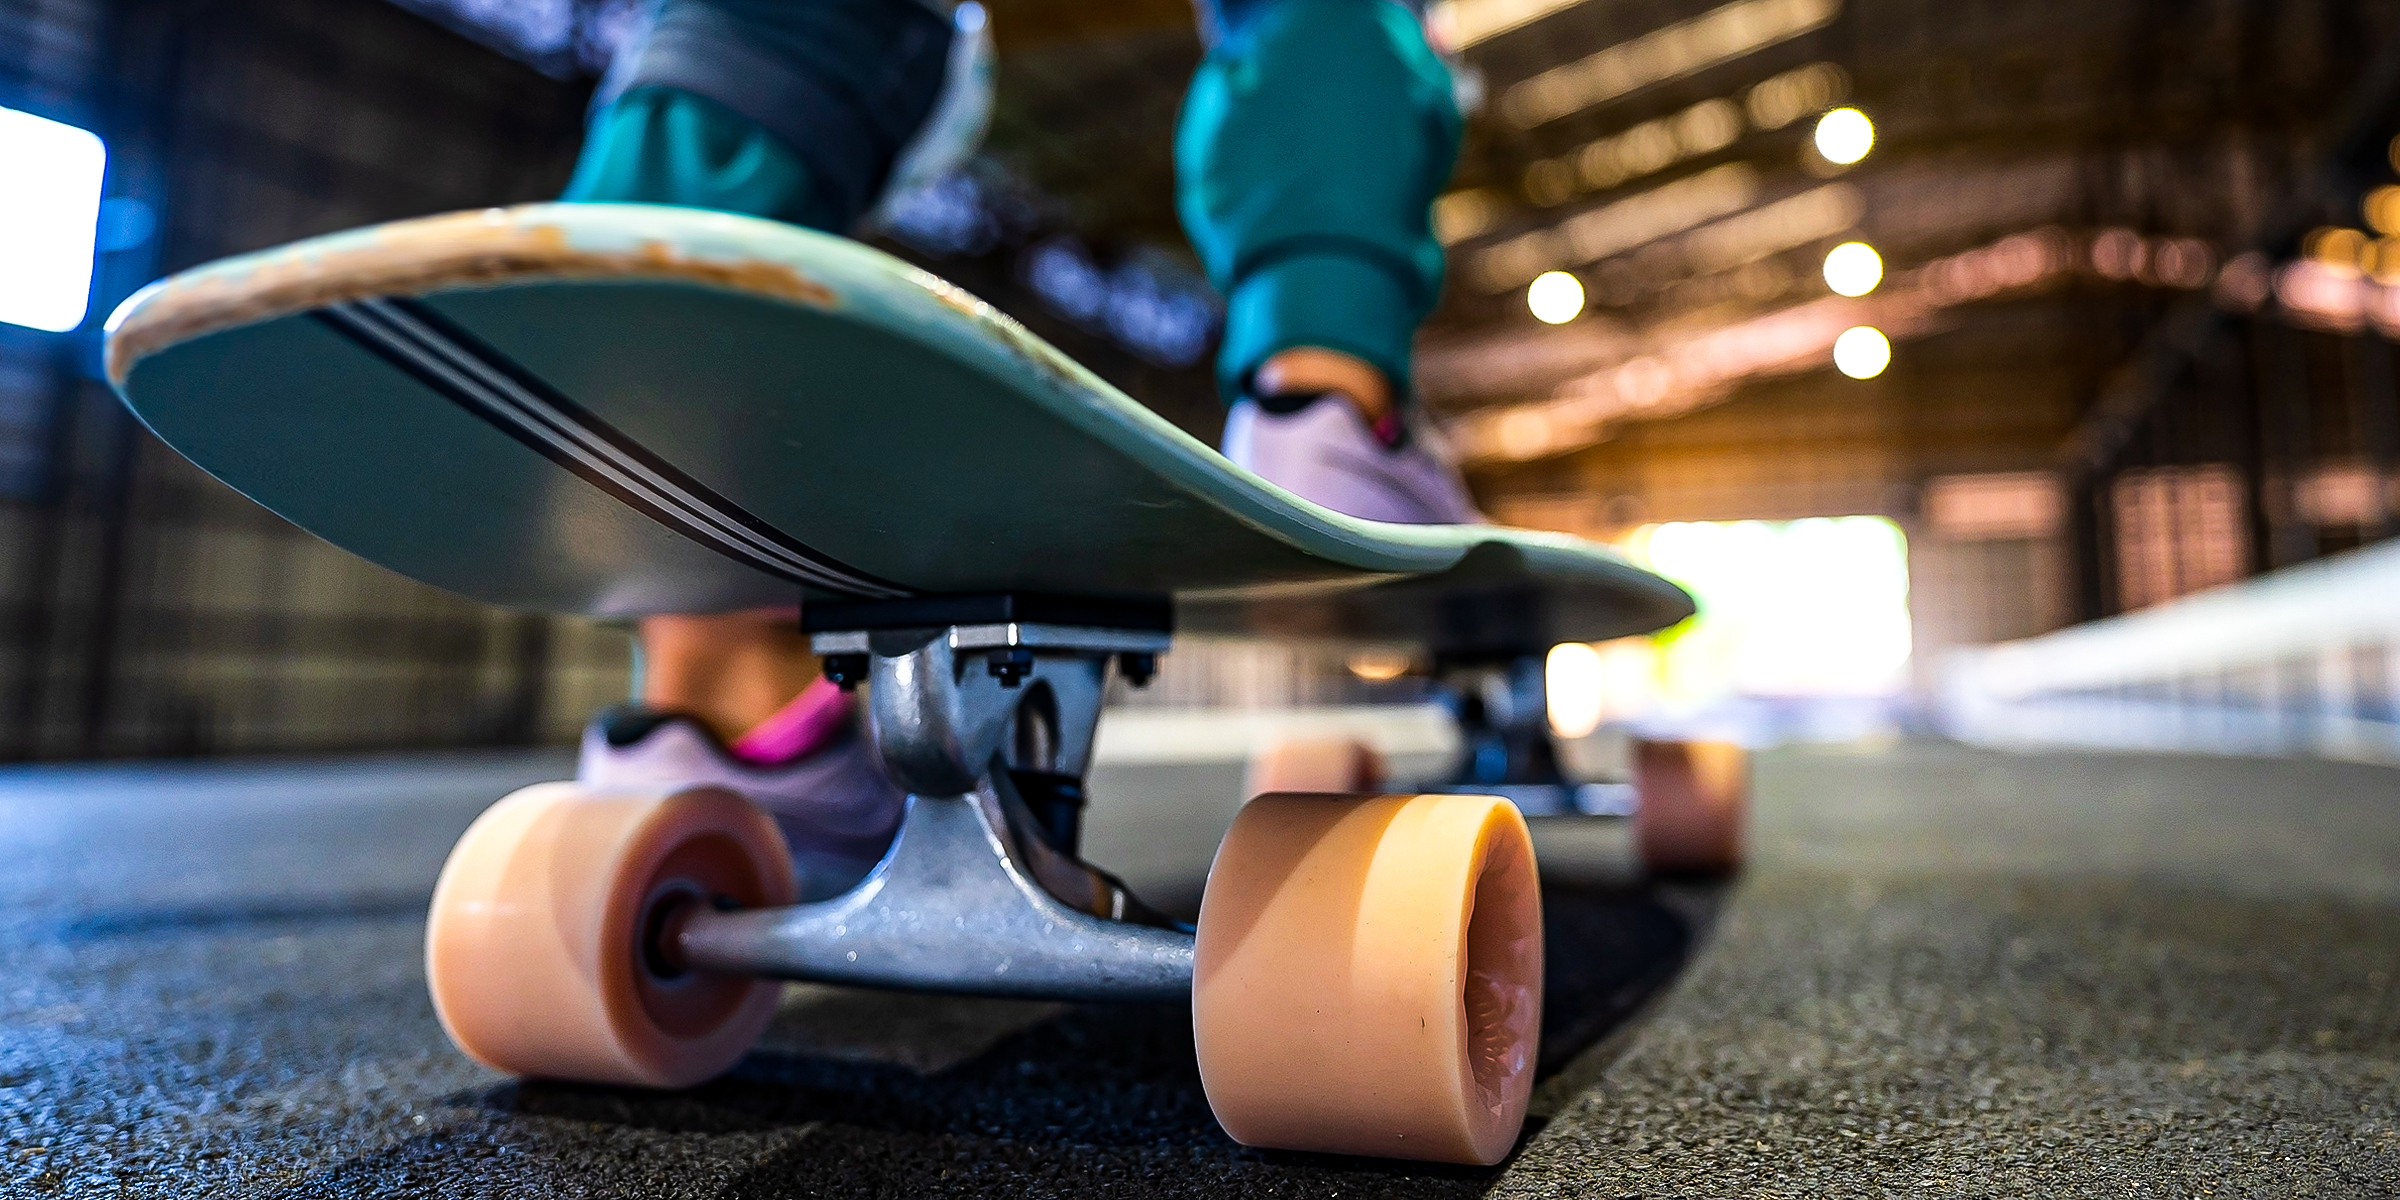 A skateboard | Source: Shutterstock